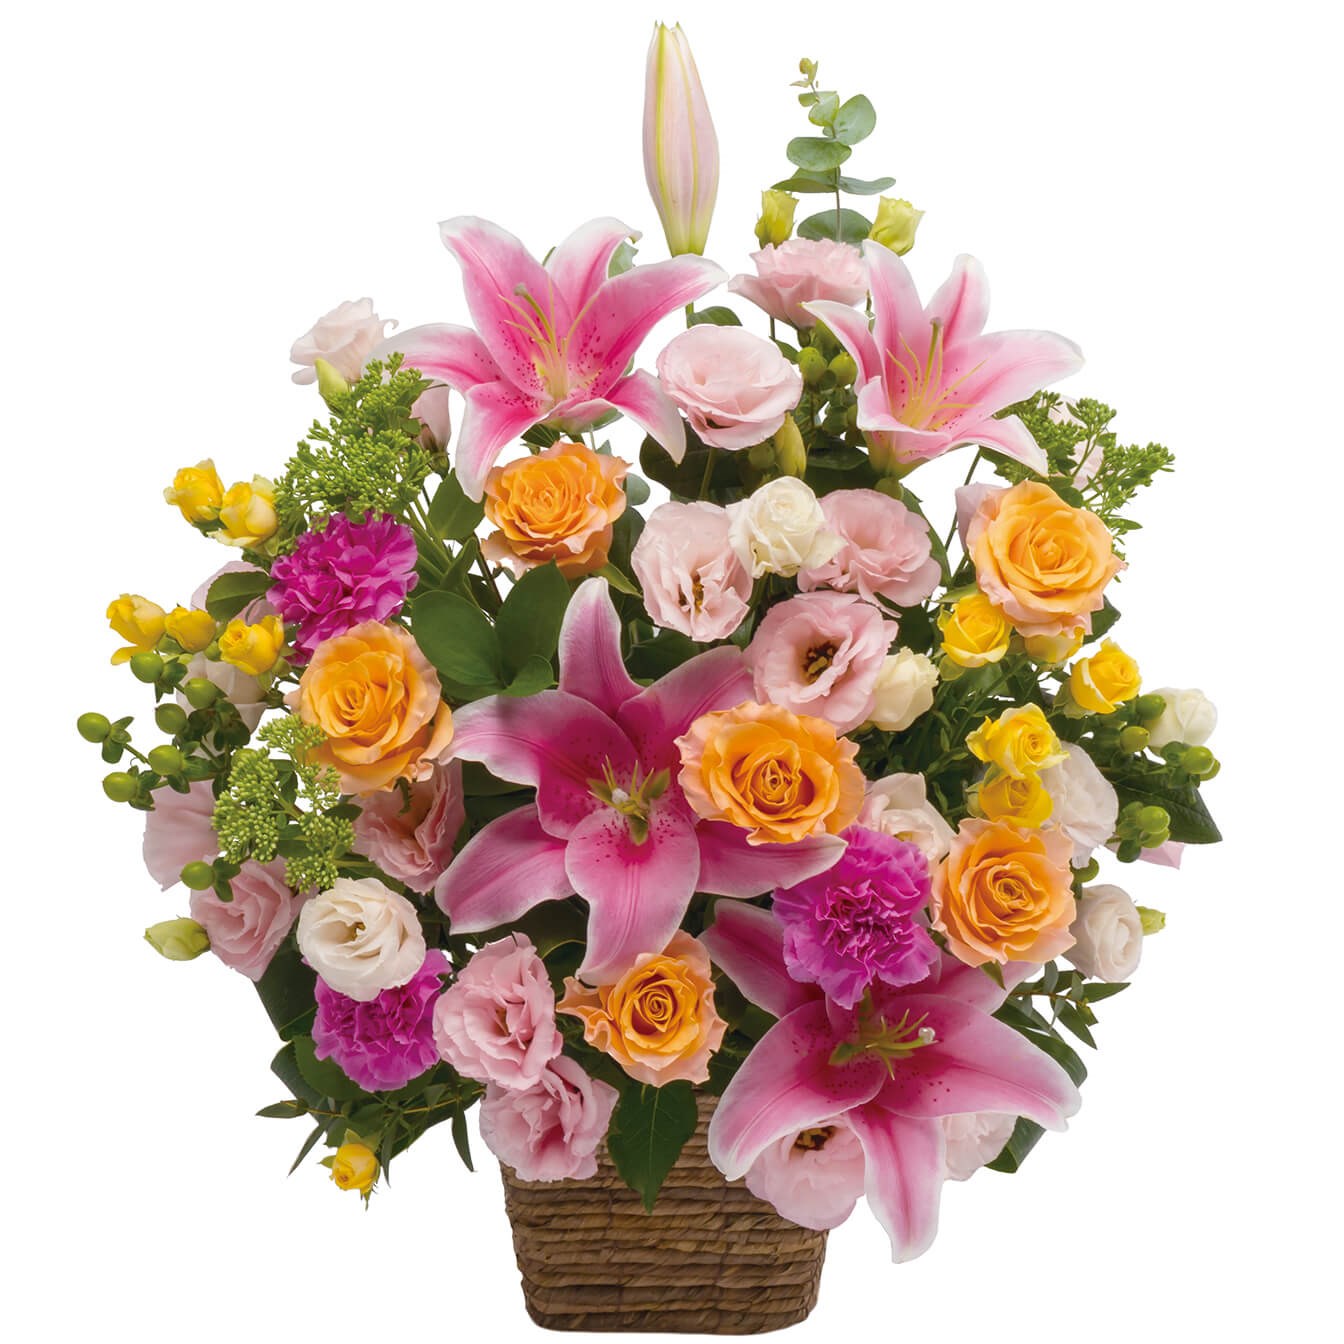 Large arrangement of multicolored flowers